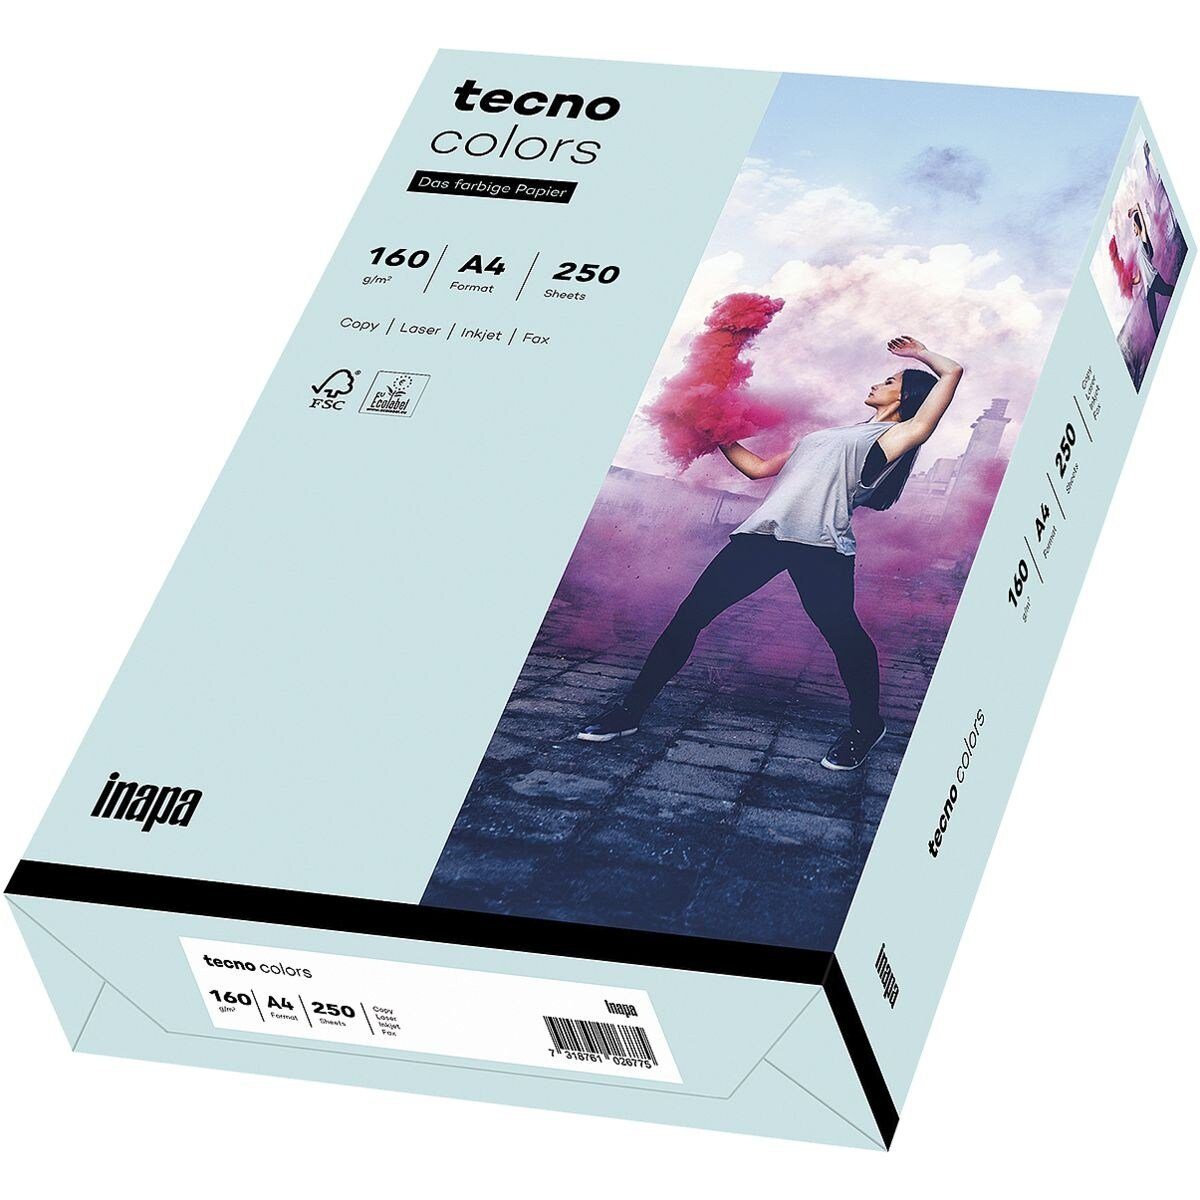 Inapa tecno Drucker- und Kopierpapier Rainbow / tecno Colors, Pastellfarben, Format DIN A4, 160 g/m², 250 Blatt hellblau